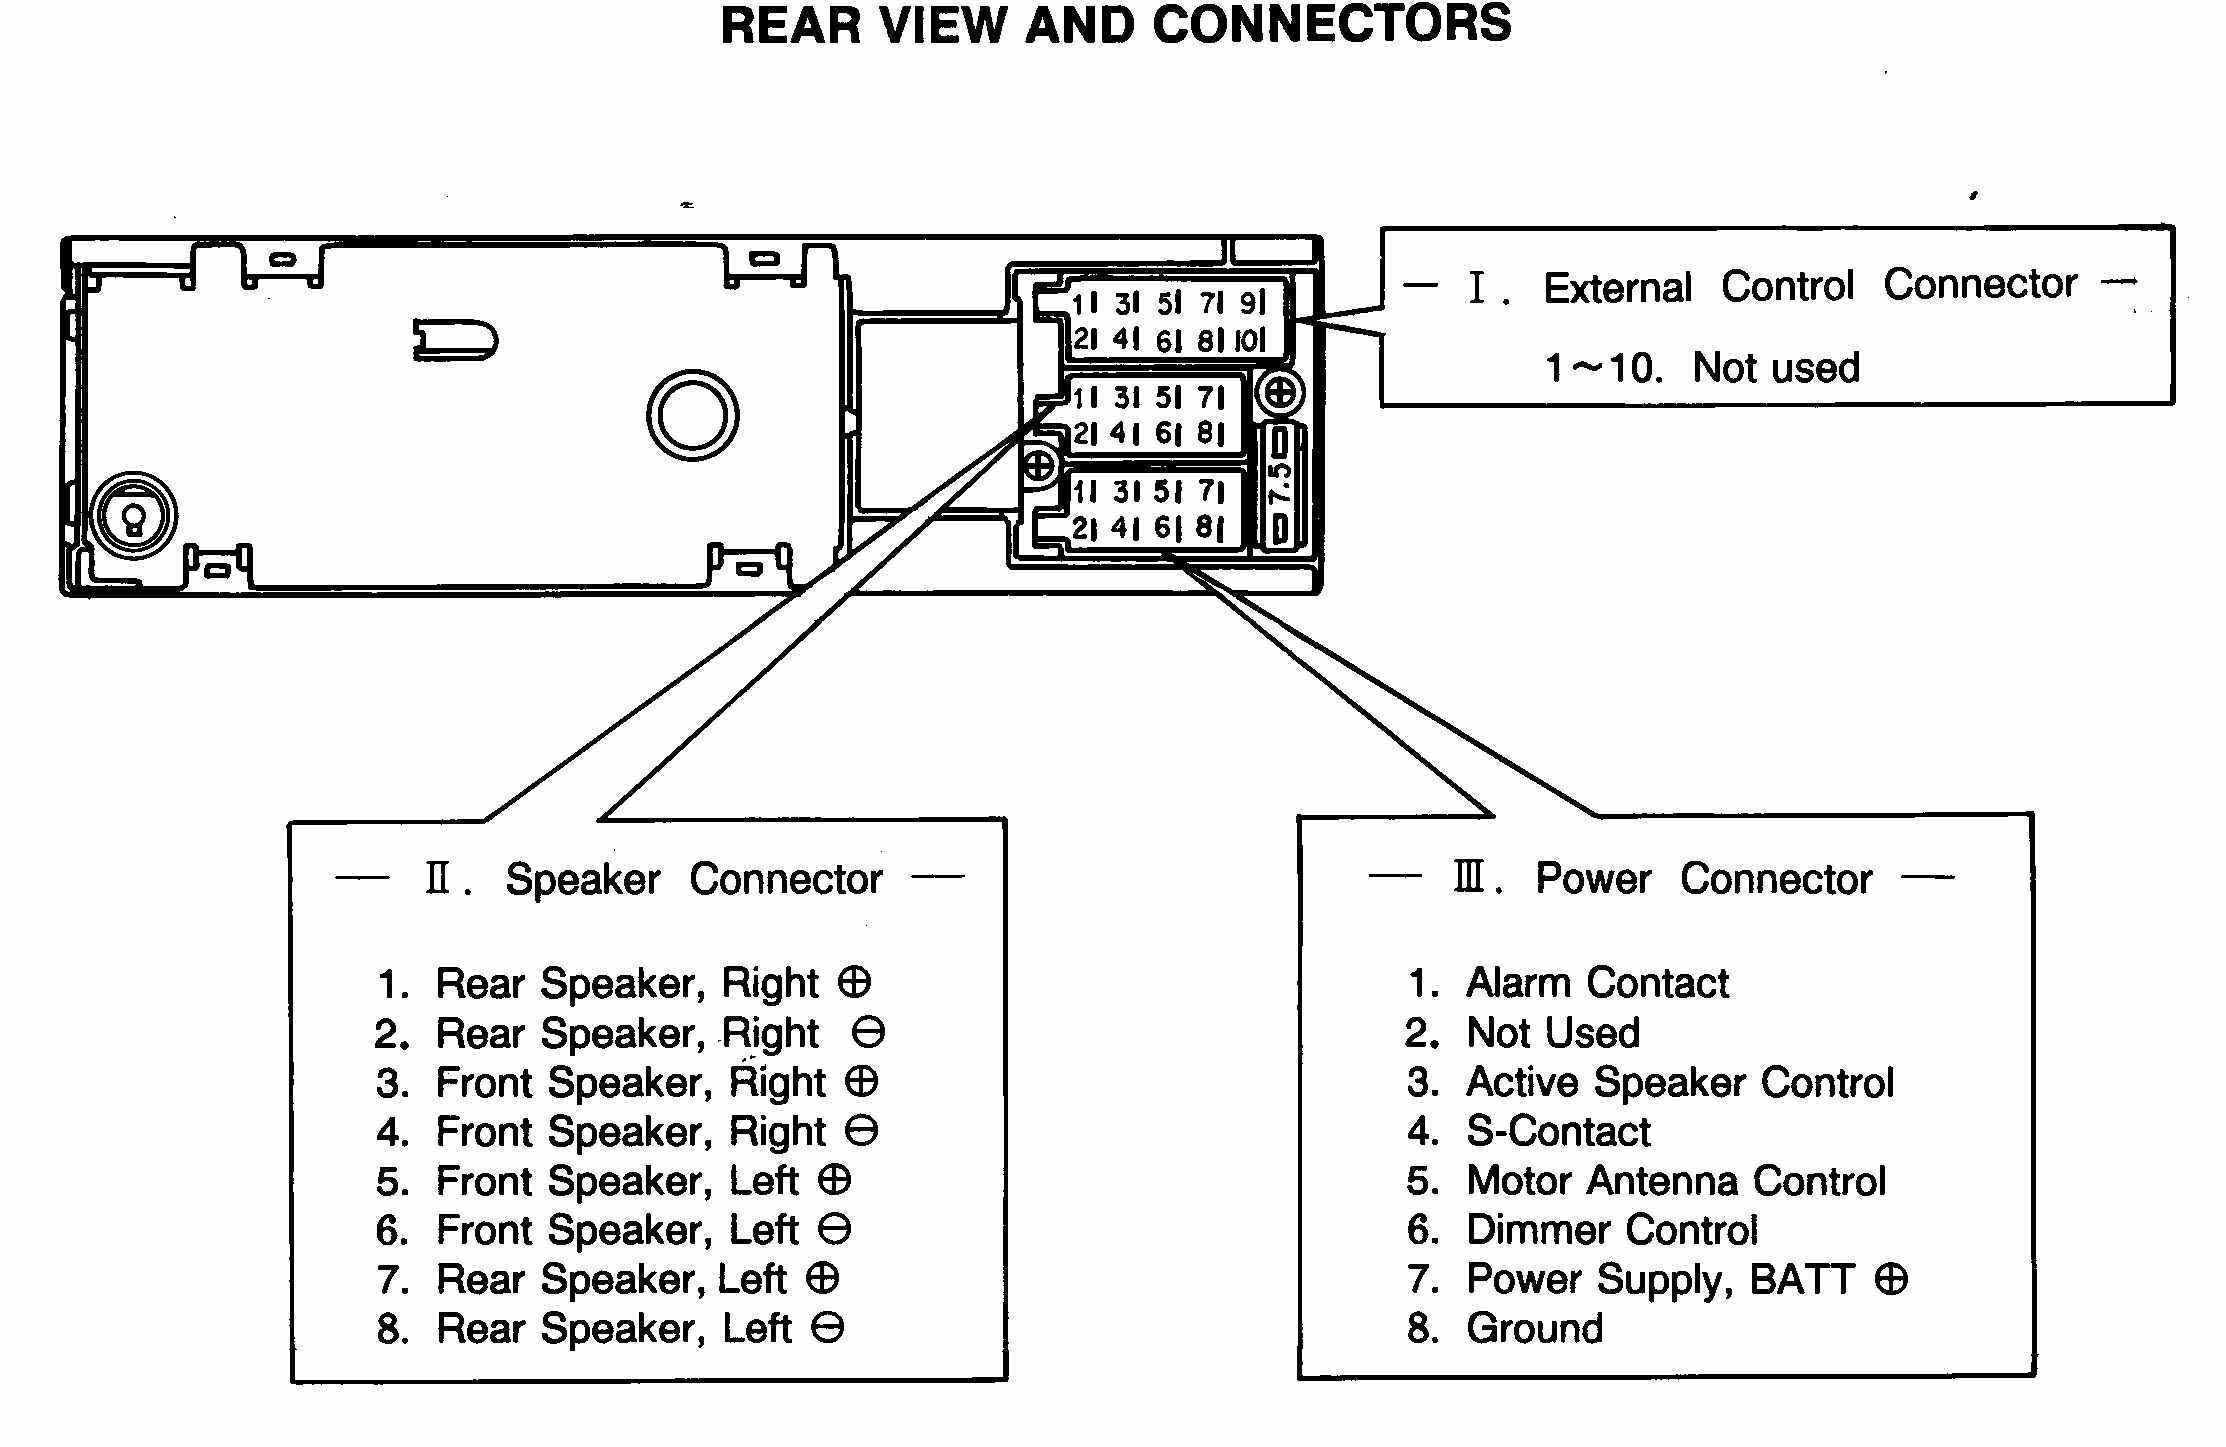 Sony Car Stereo Wiring Diagram - Data Wiring Diagram Today - Sony Car Stereo Wiring Diagram